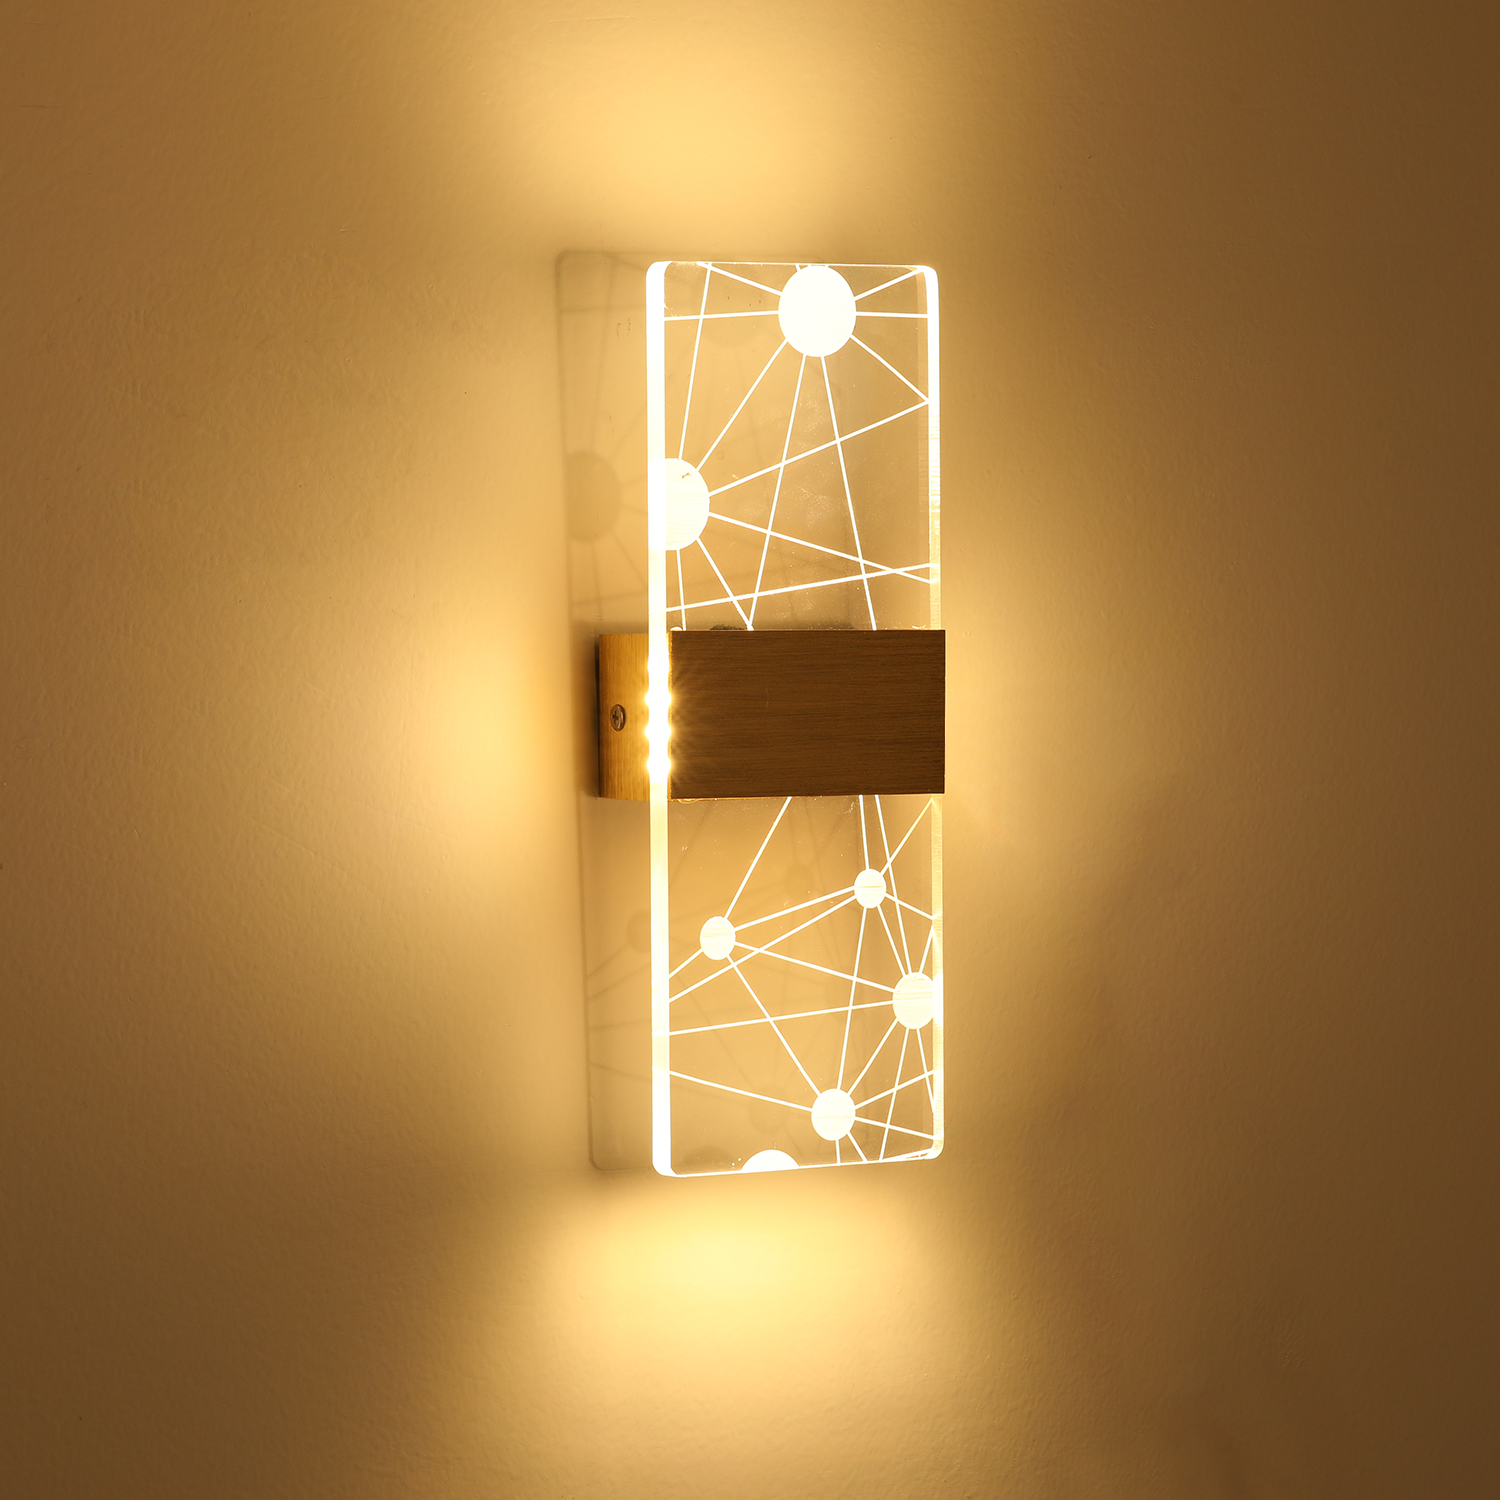 Dimmbar LED Wandleuchte Wandlampe Innen Flur Strahler Up Down Schlafzimmer Urwdk